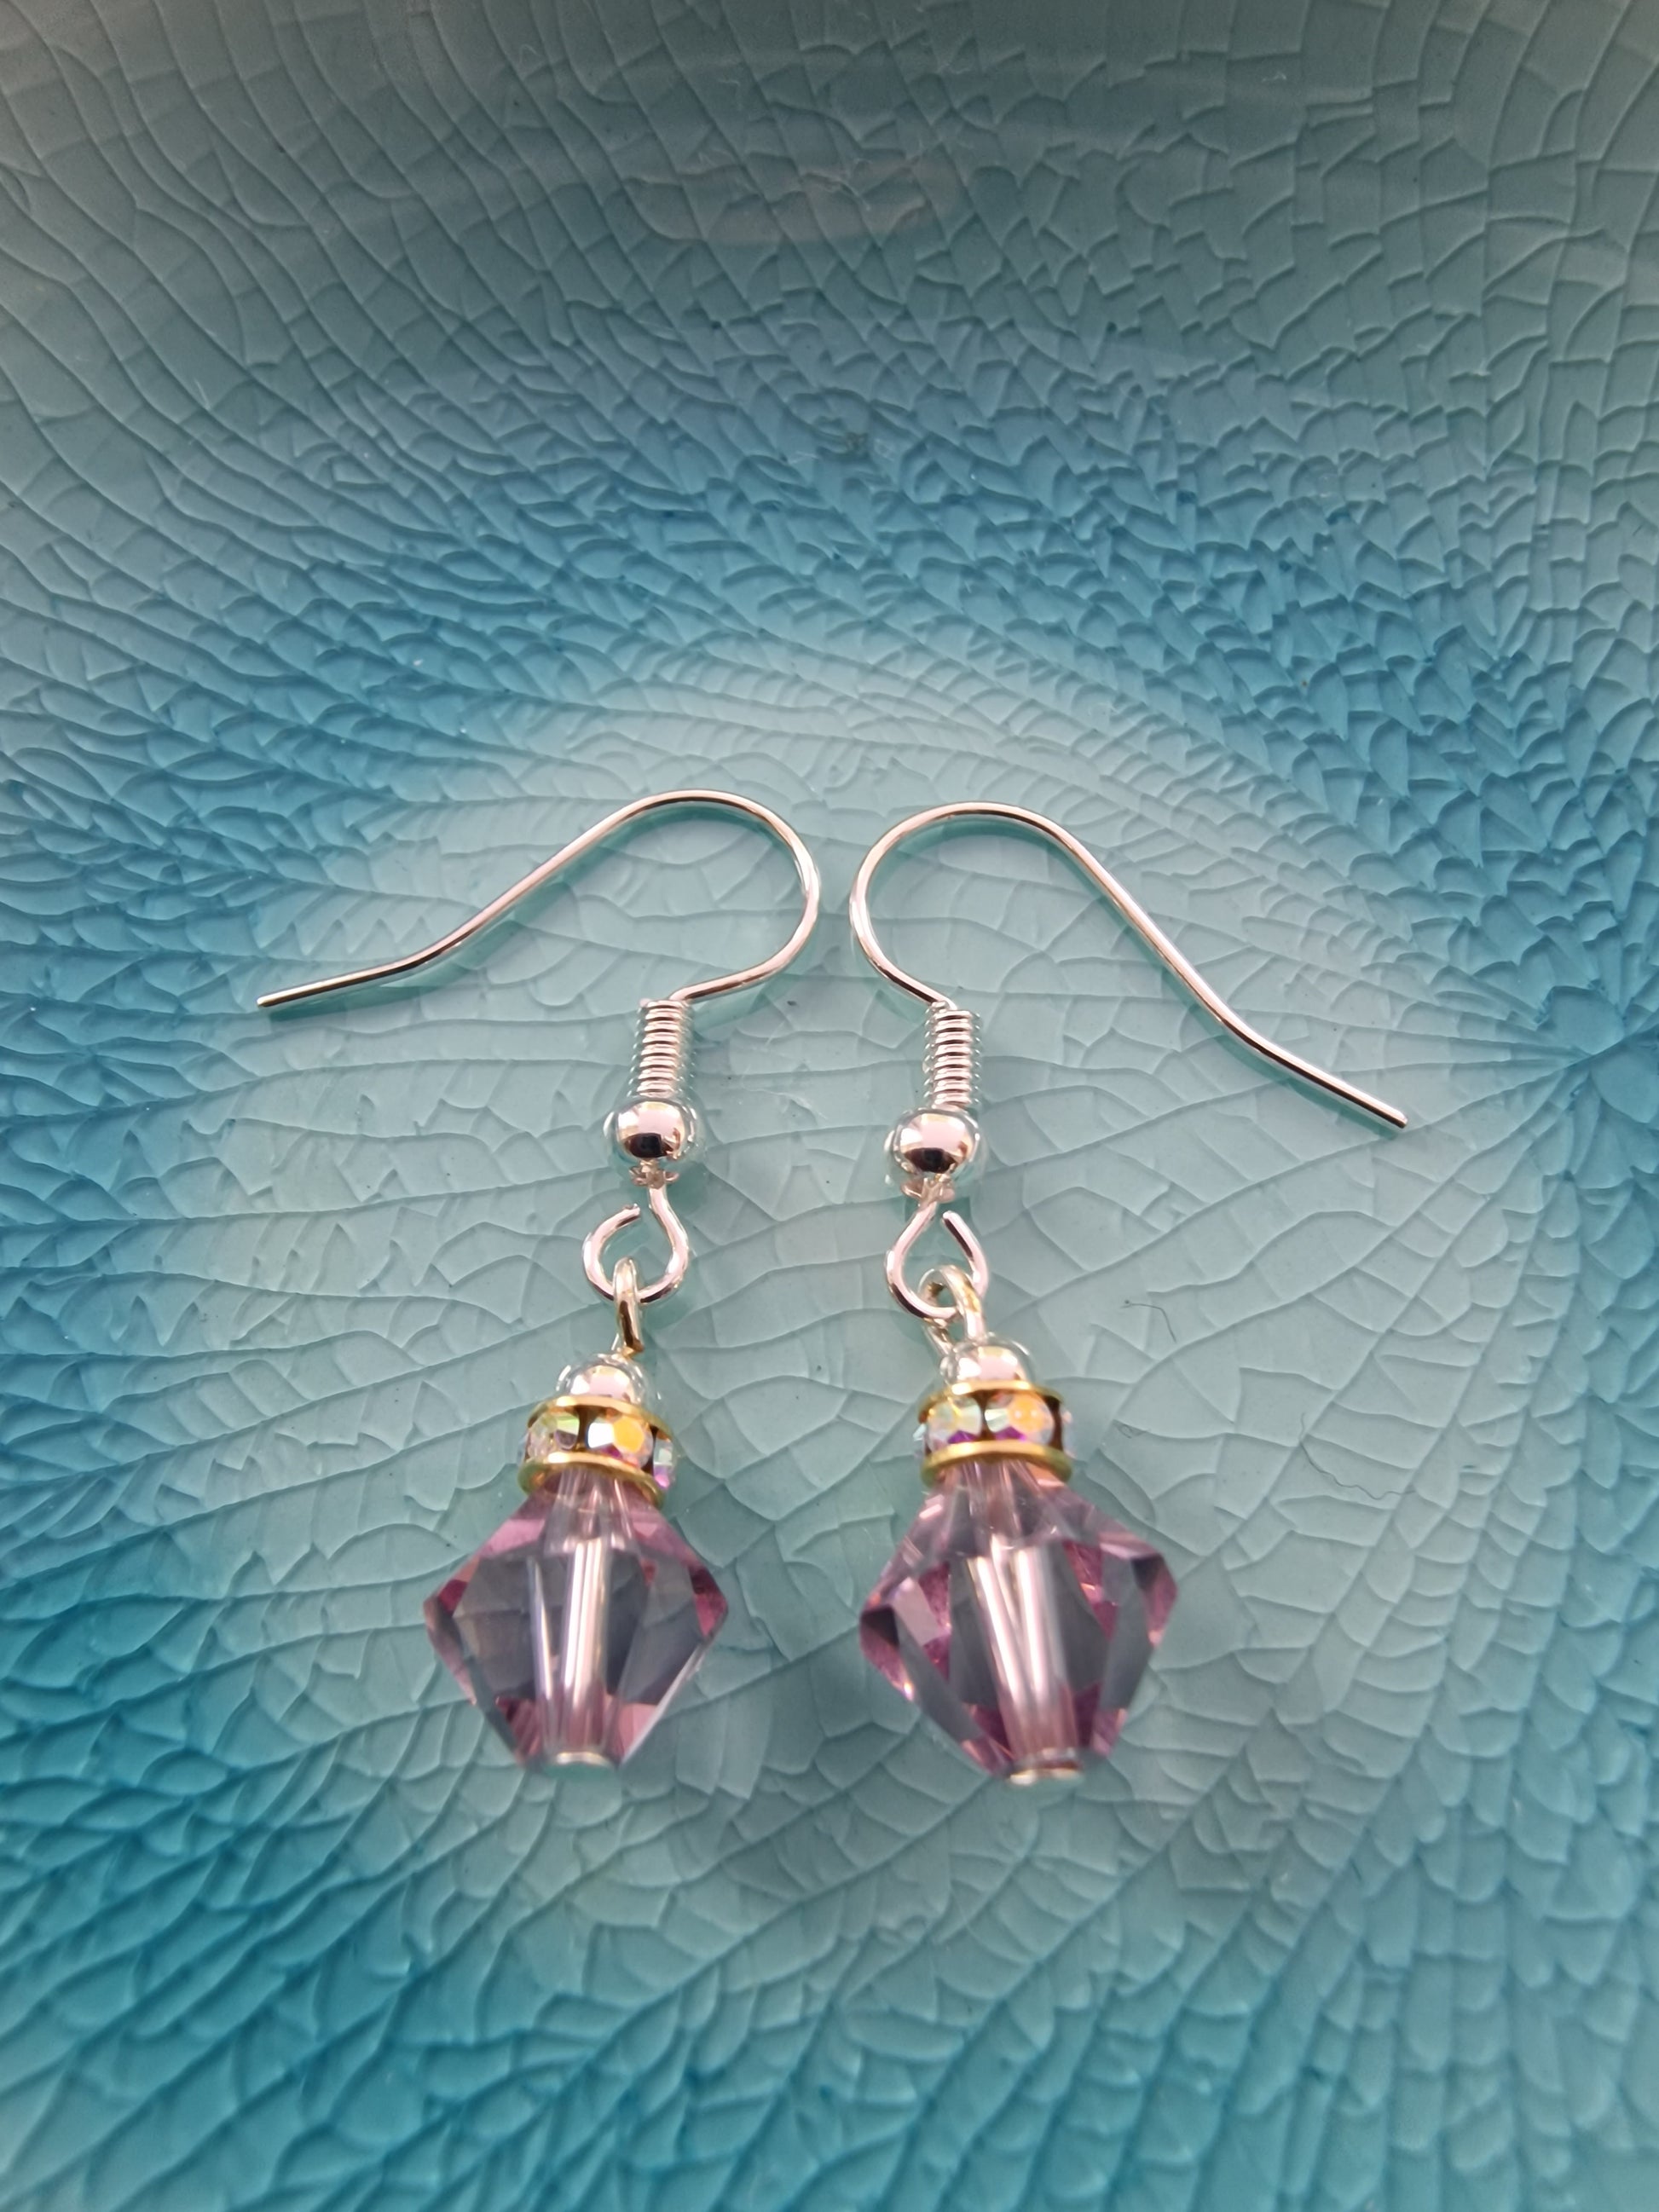 Lavender Swarovski earrings